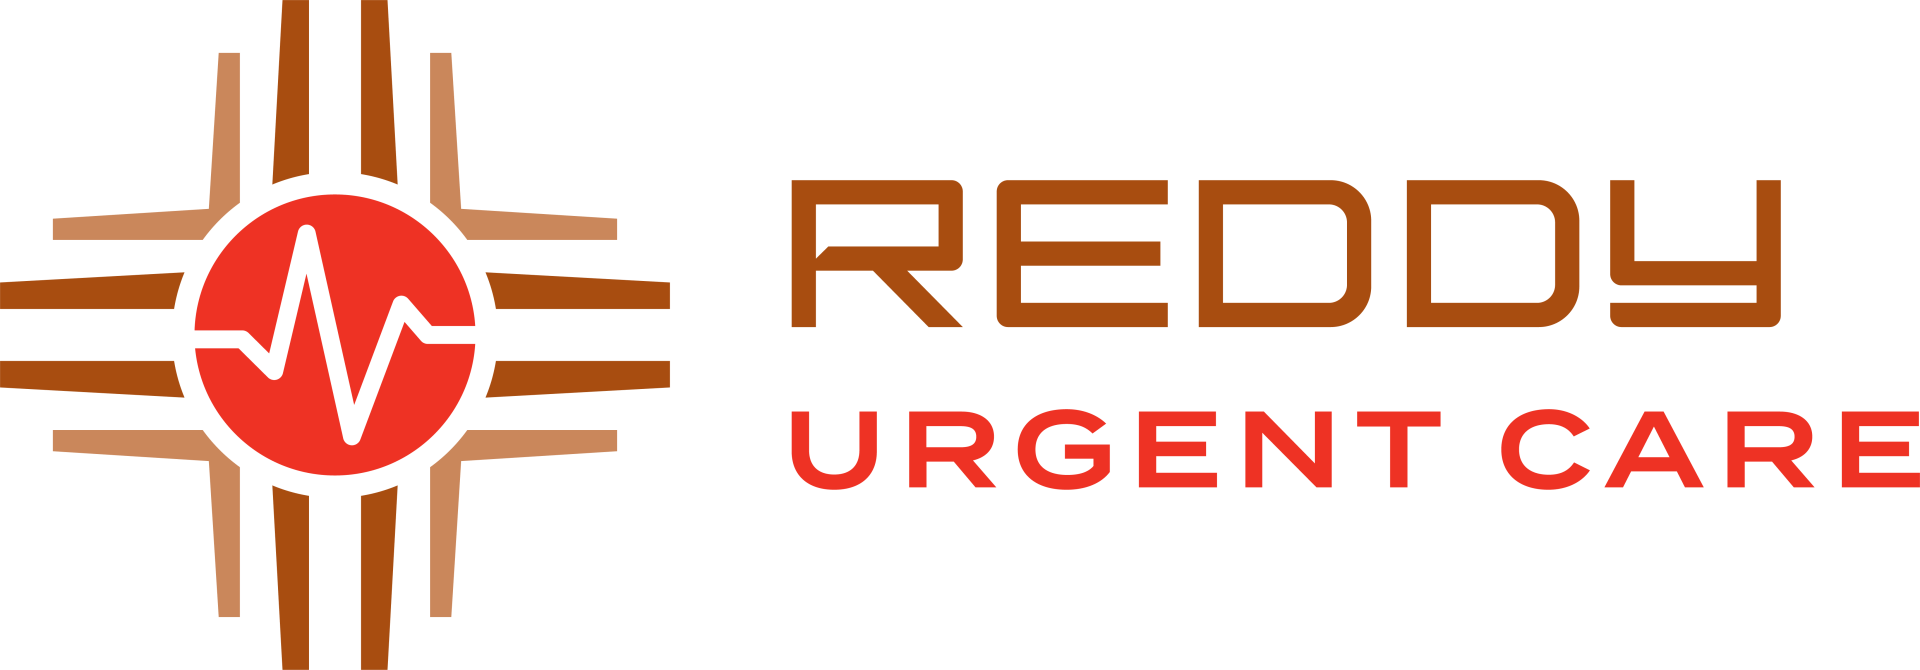 reddy urgent care centers